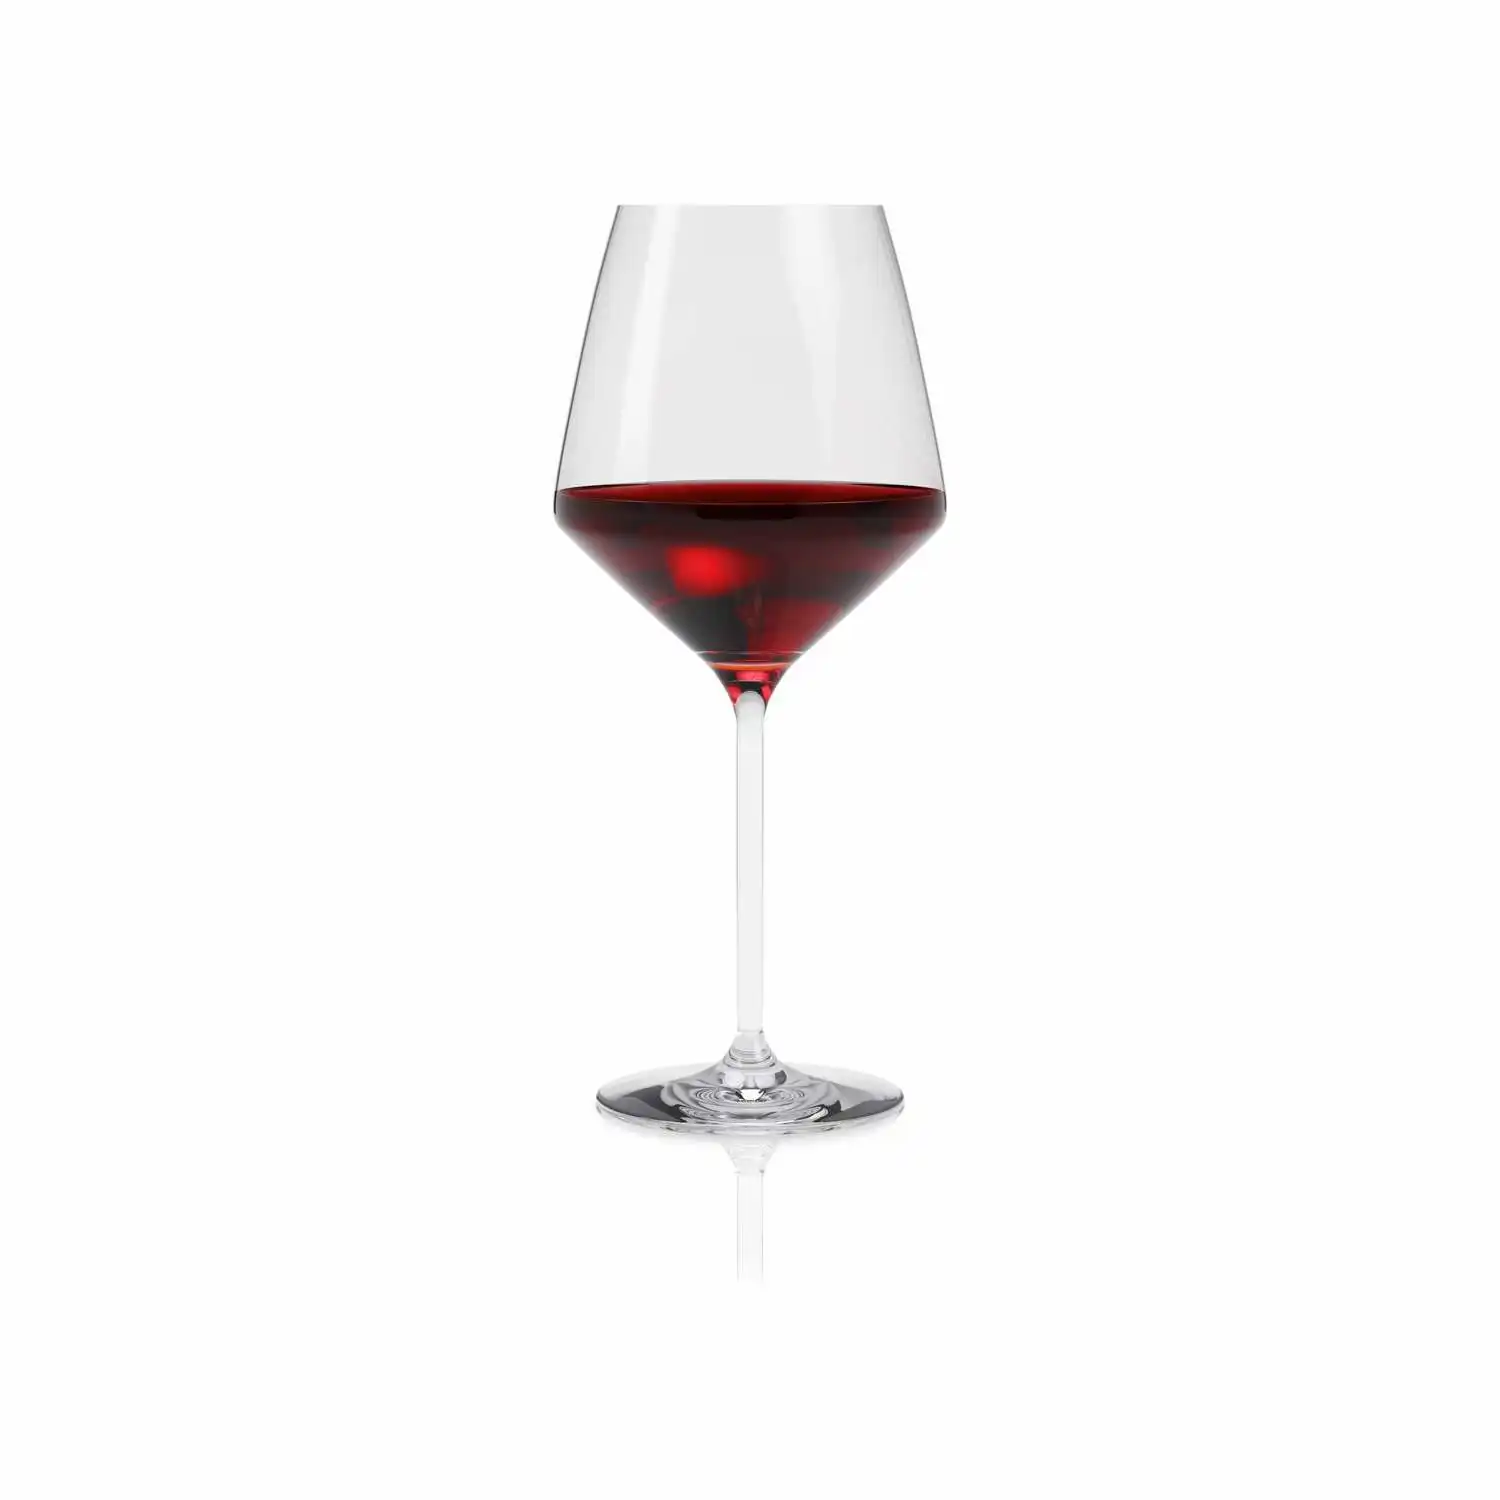 541202-bourgogne-wine-glass-legio-nova-1pcs-regi-shadow.webp